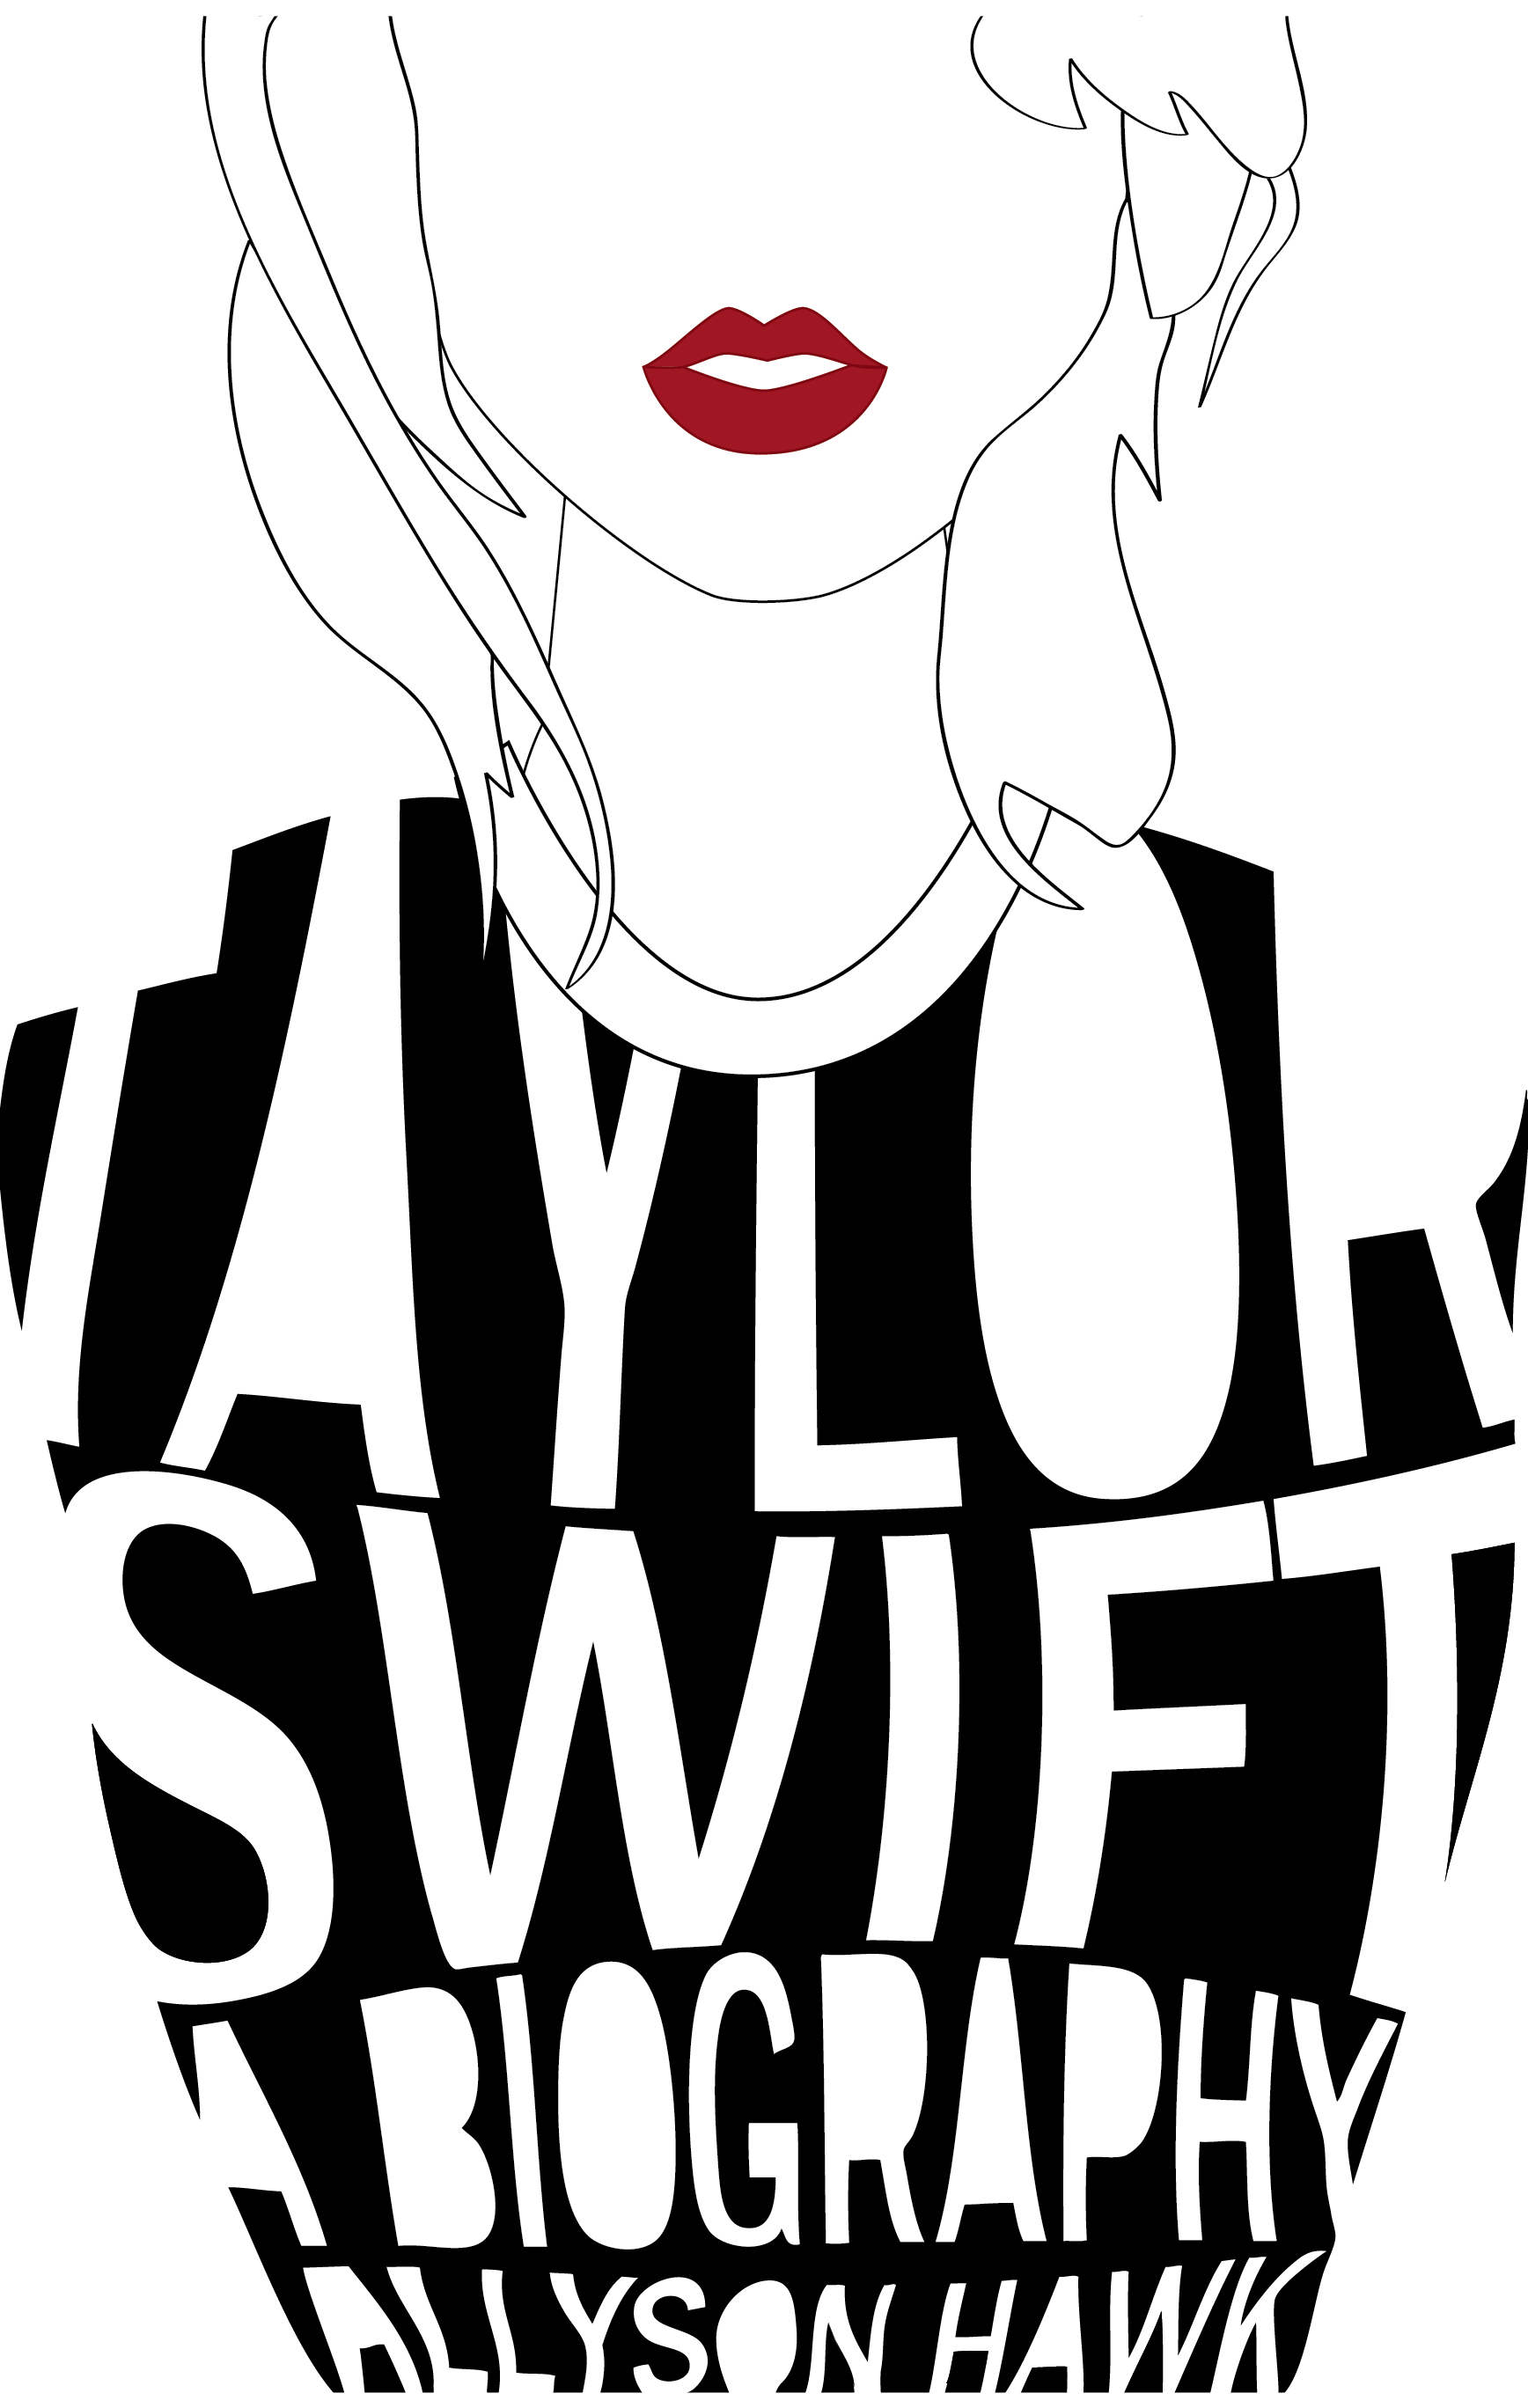 Taylor Swift Logo - Allyson Hawk - Taylor Swift Book Cover